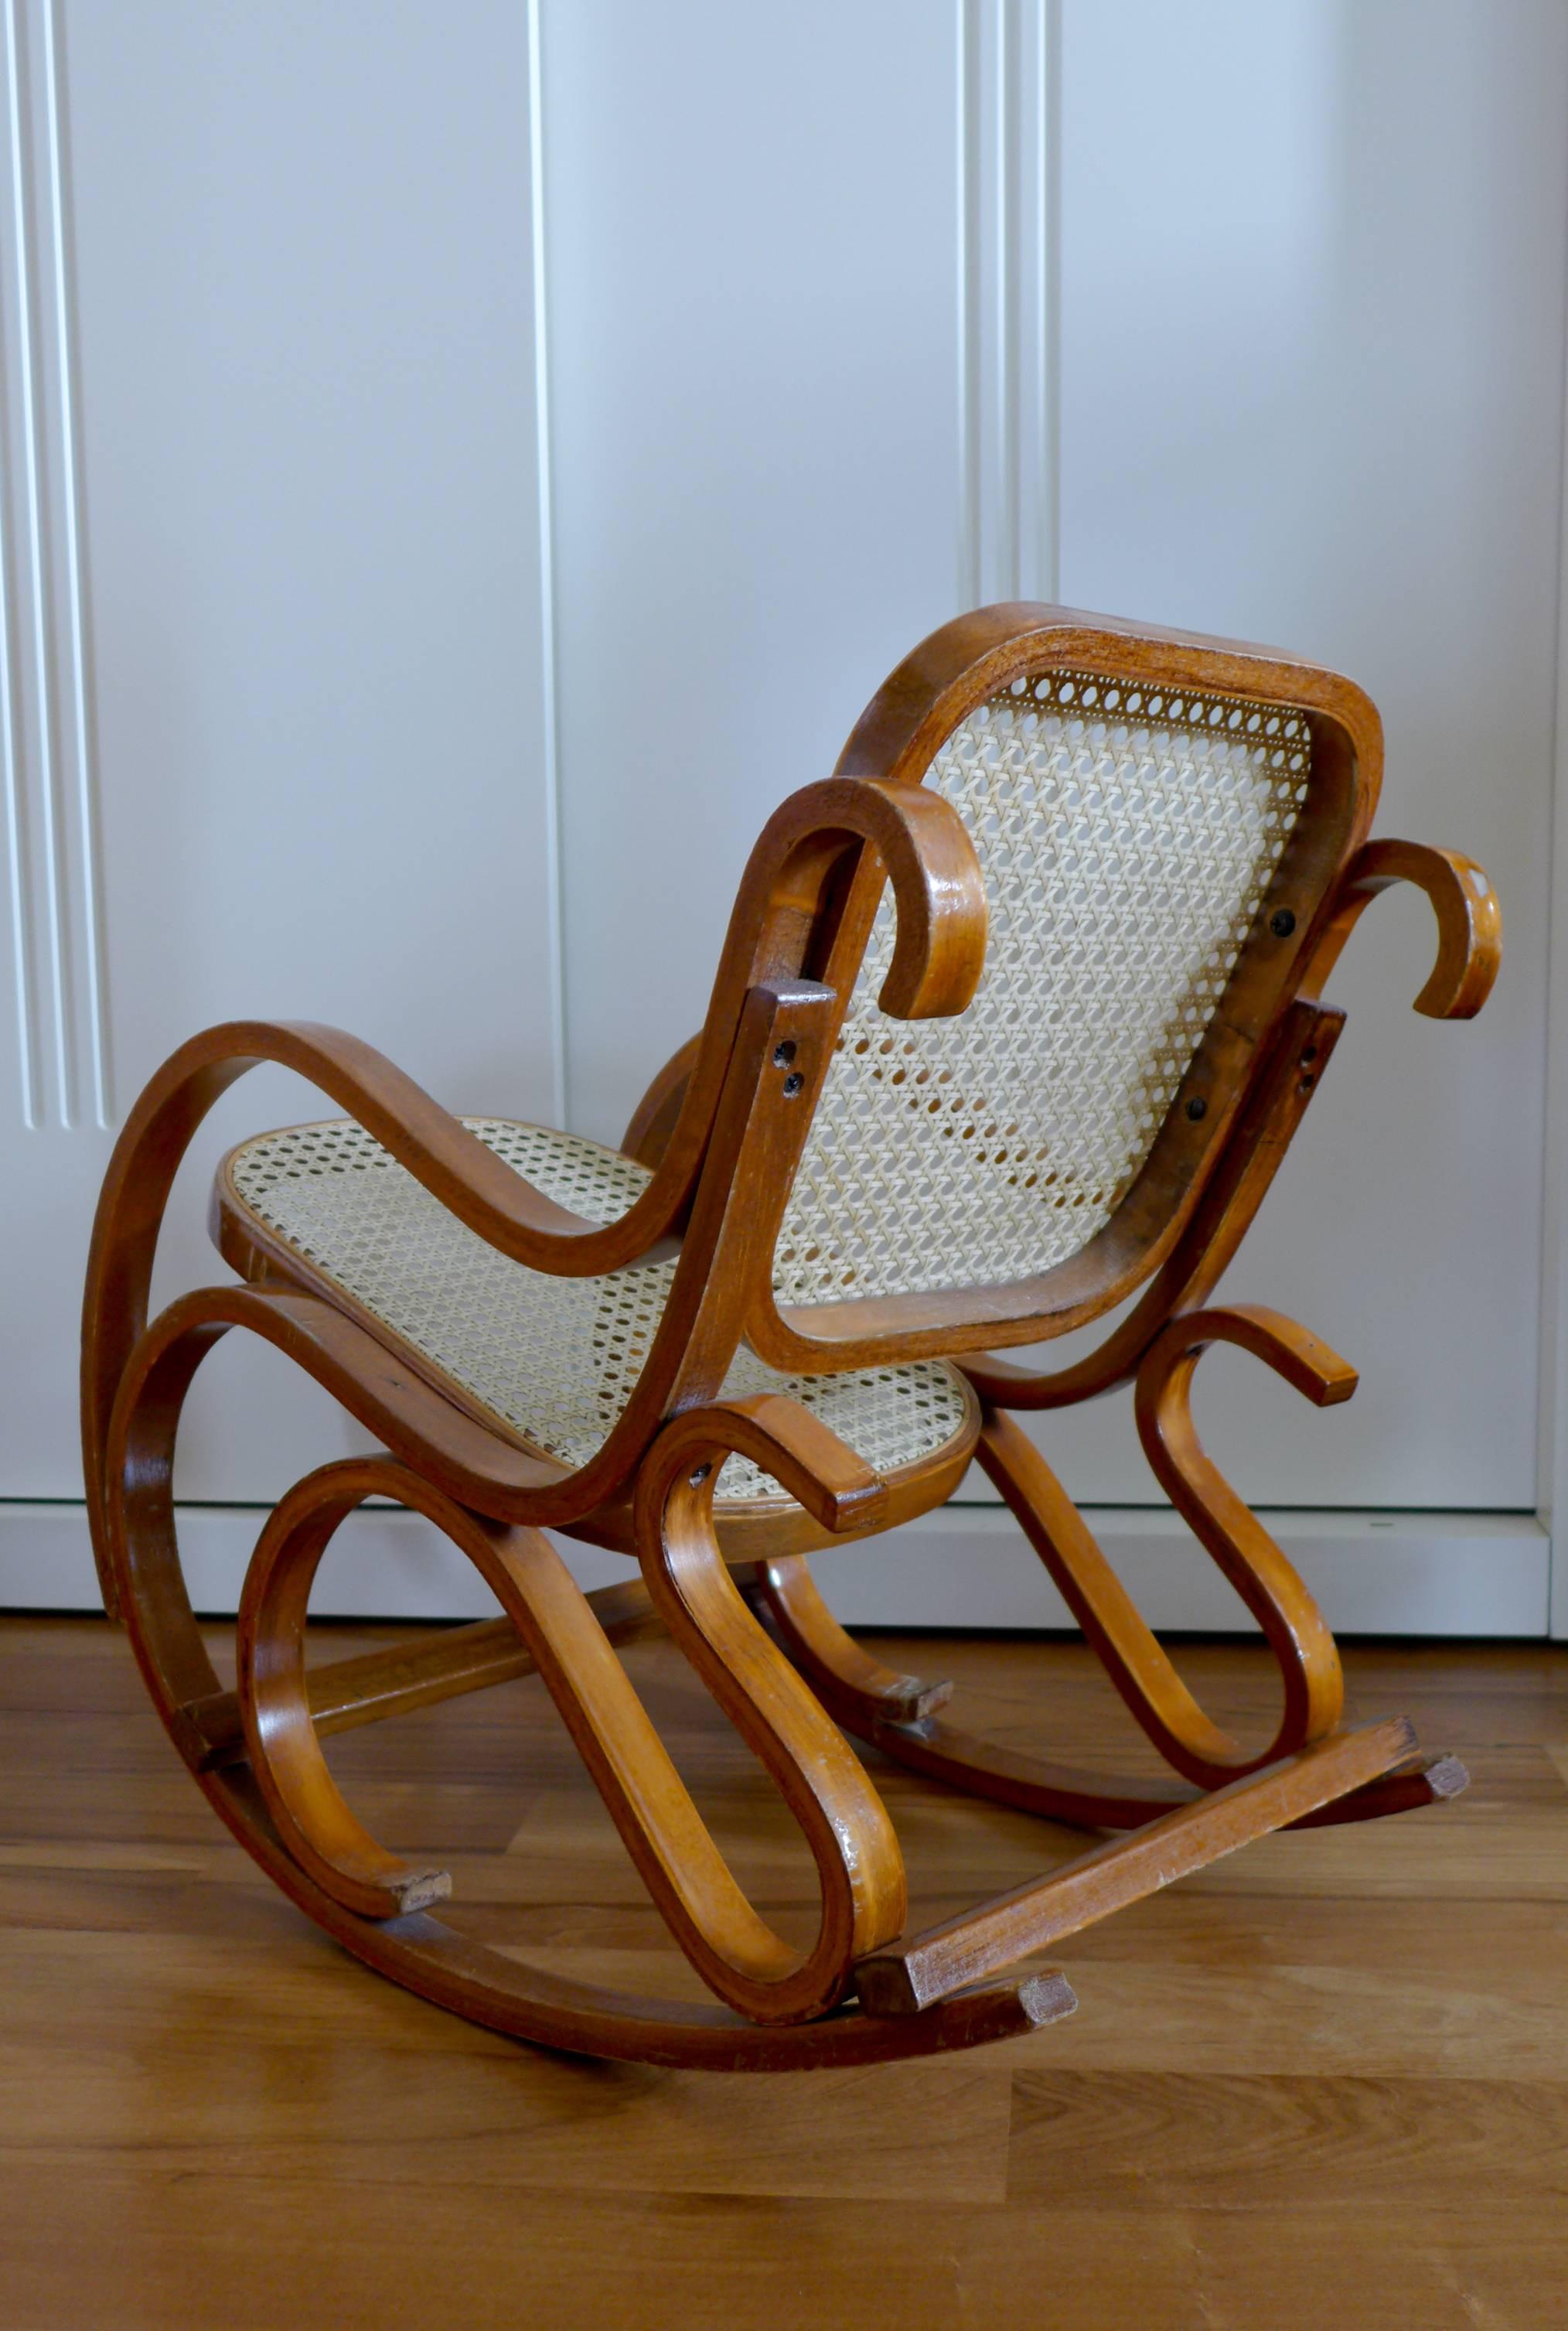 1940s rocking chair